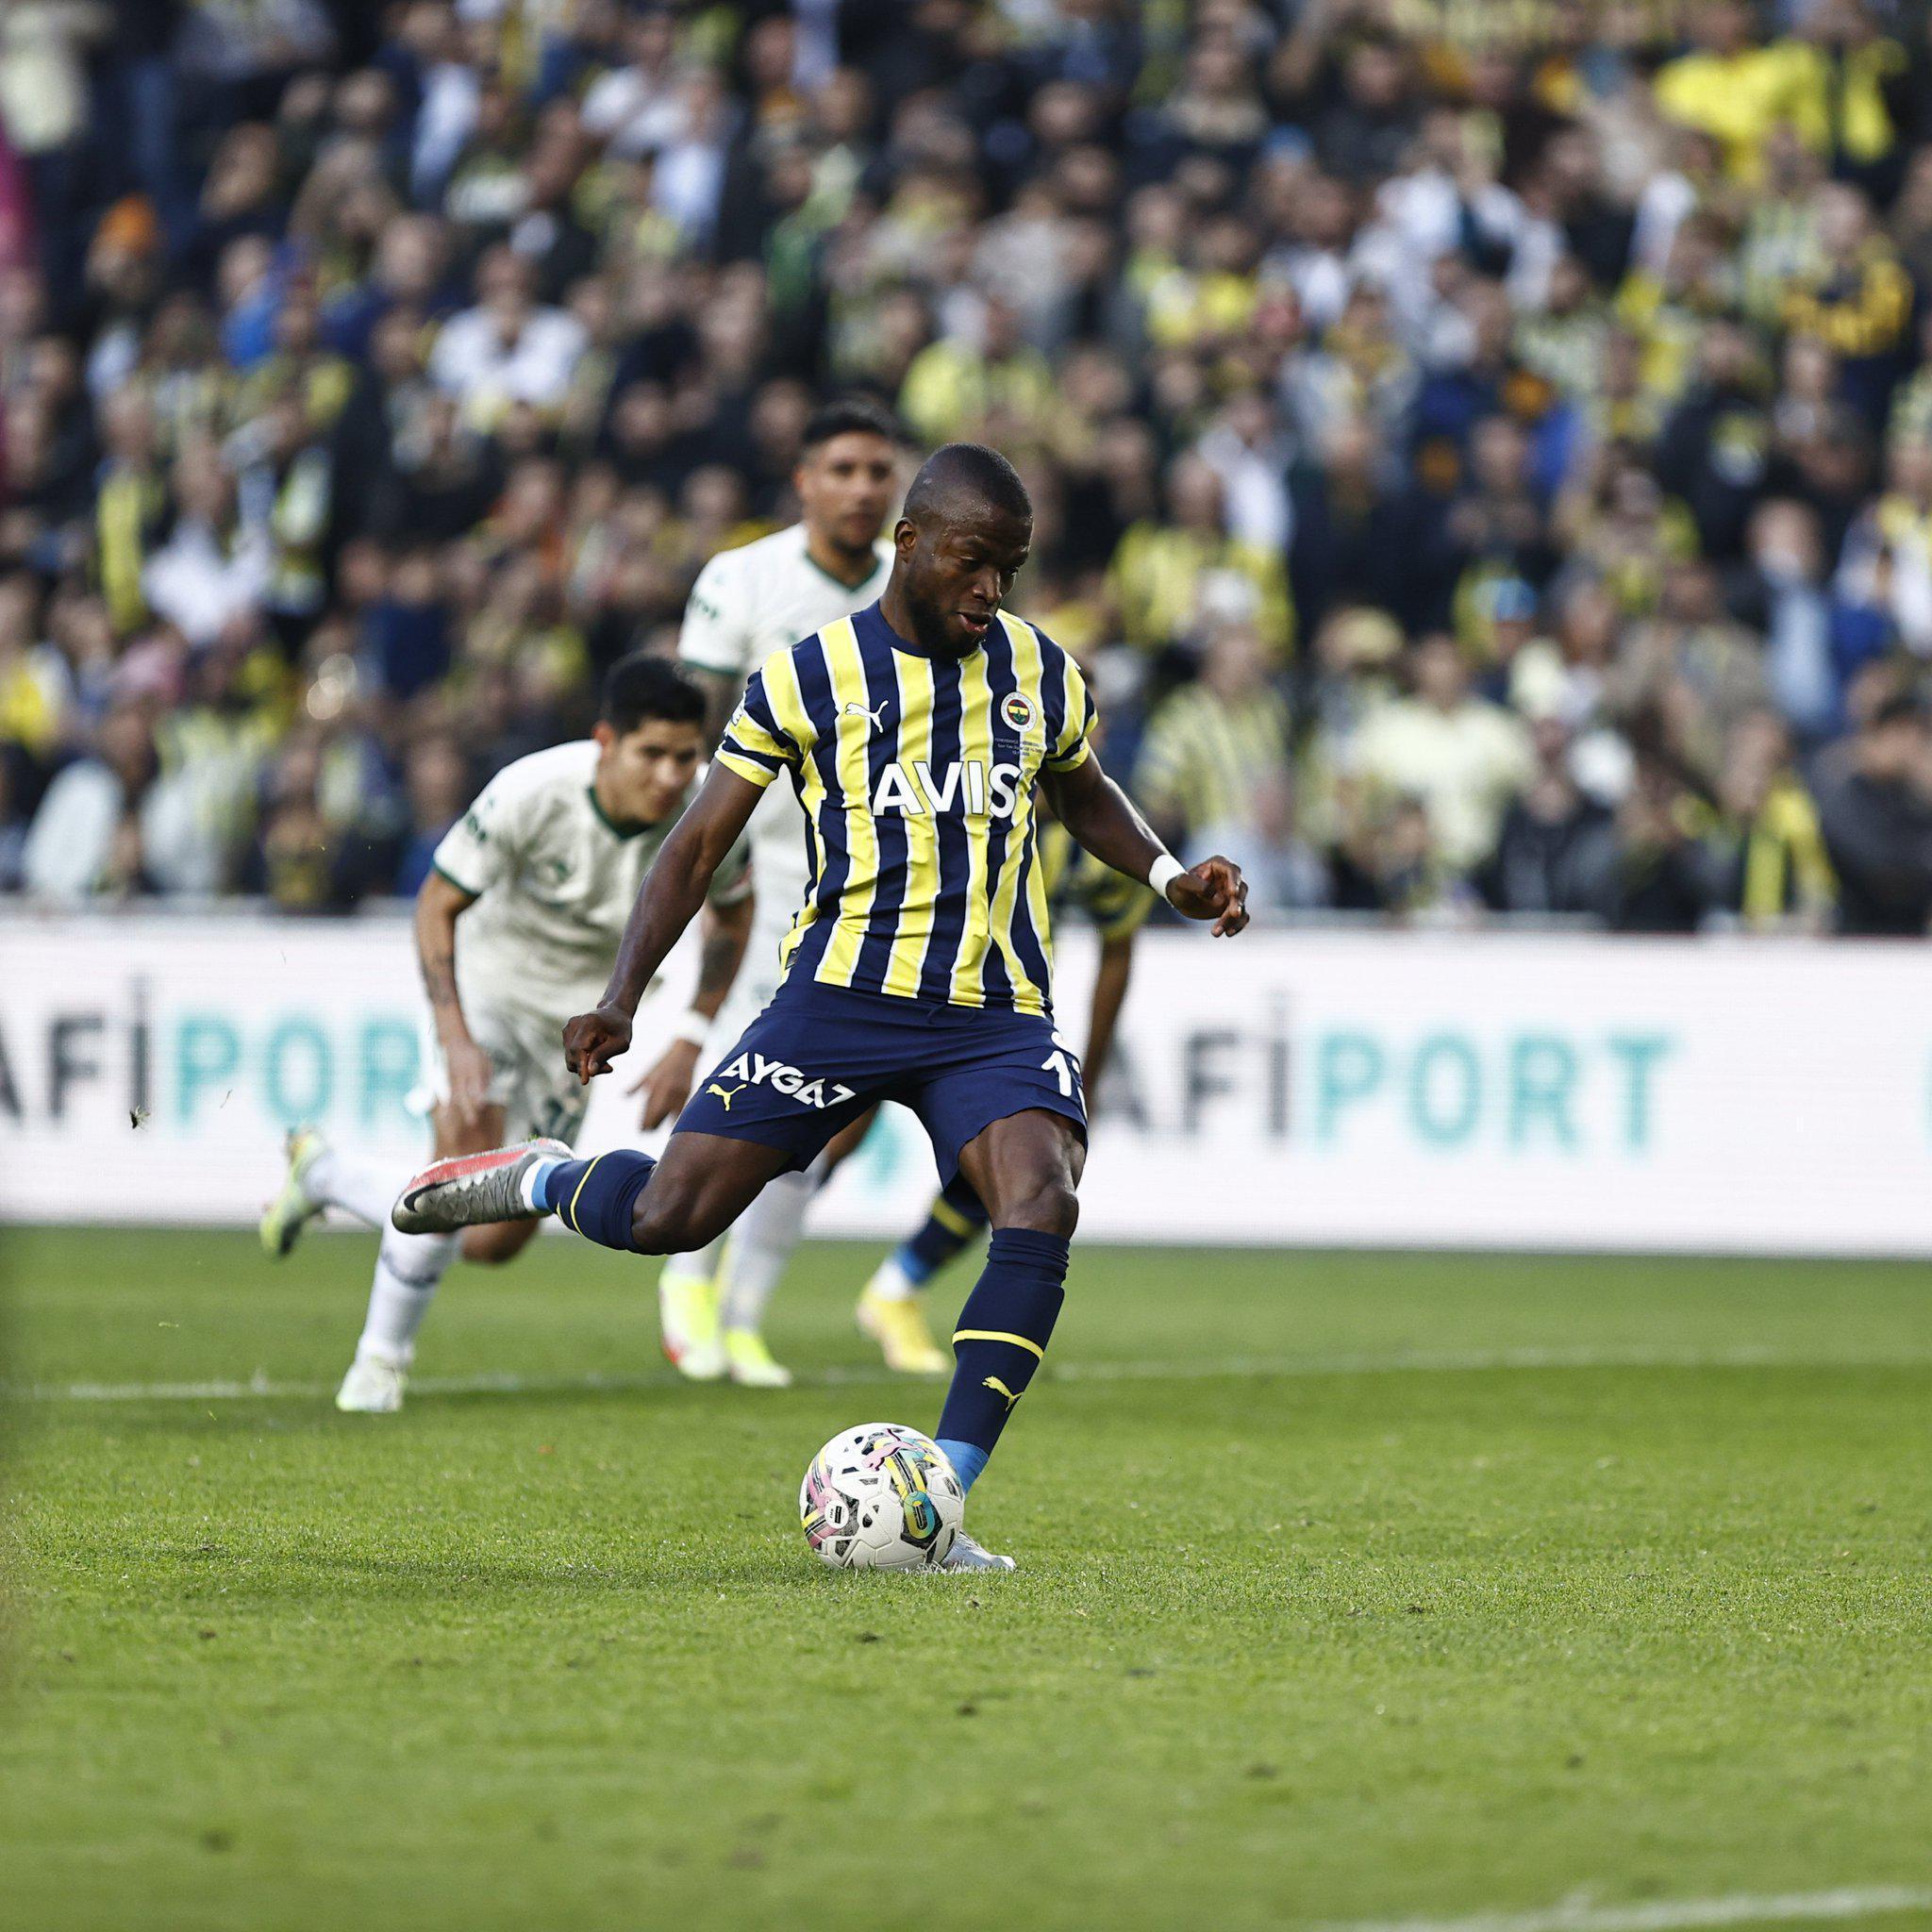 (ÖZET) Fenerbahçe - Giresunspor maç sonucu: 1-2